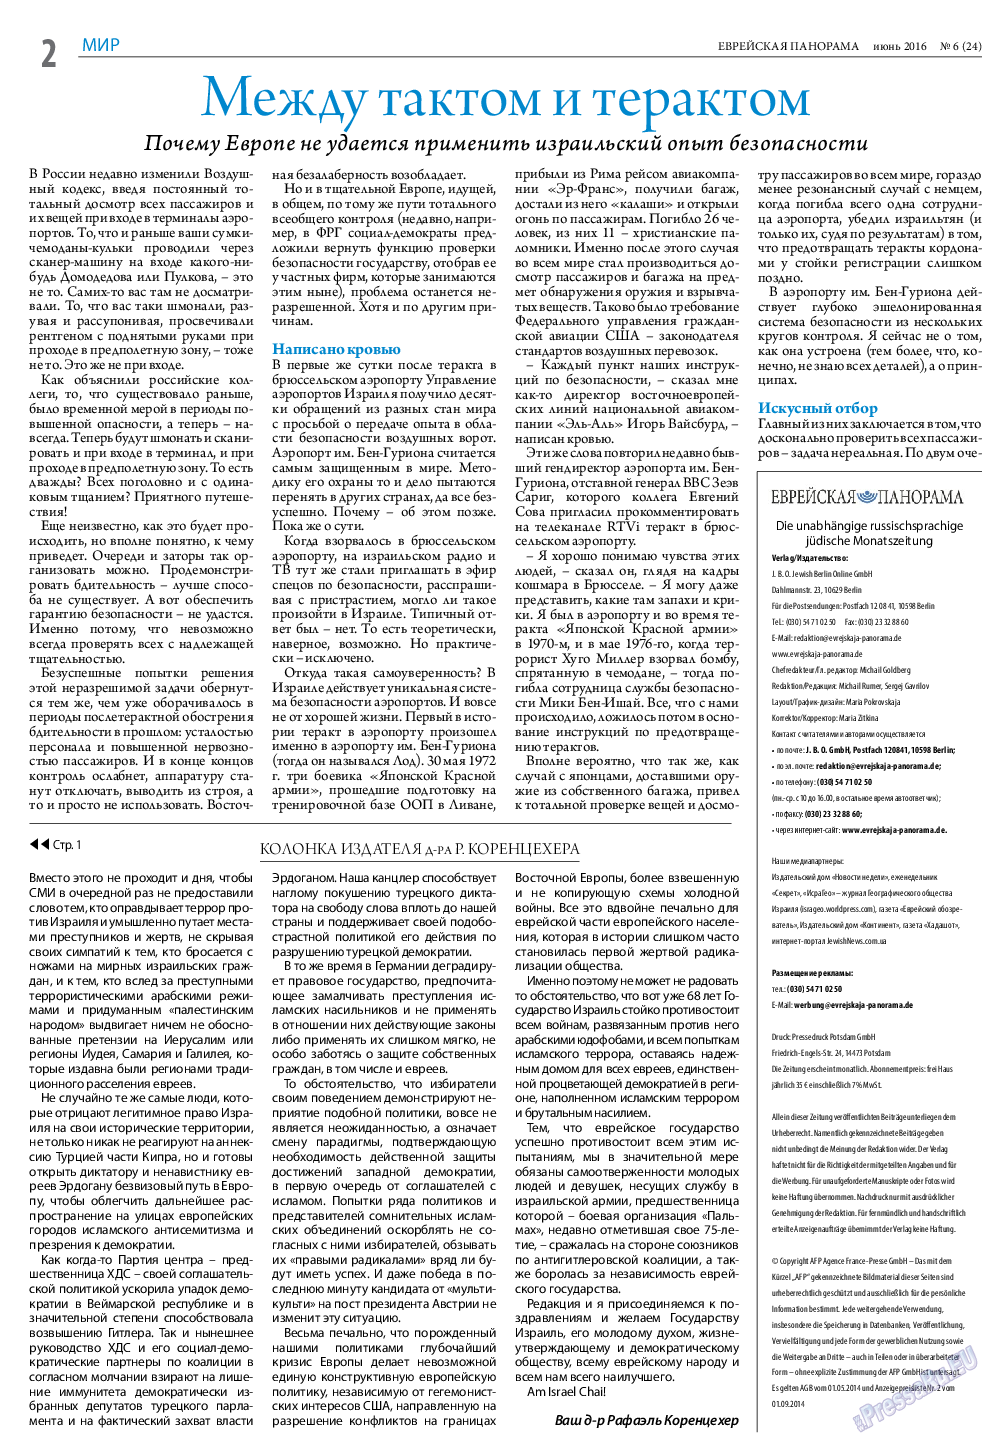 Еврейская панорама, газета. 2016 №6 стр.2